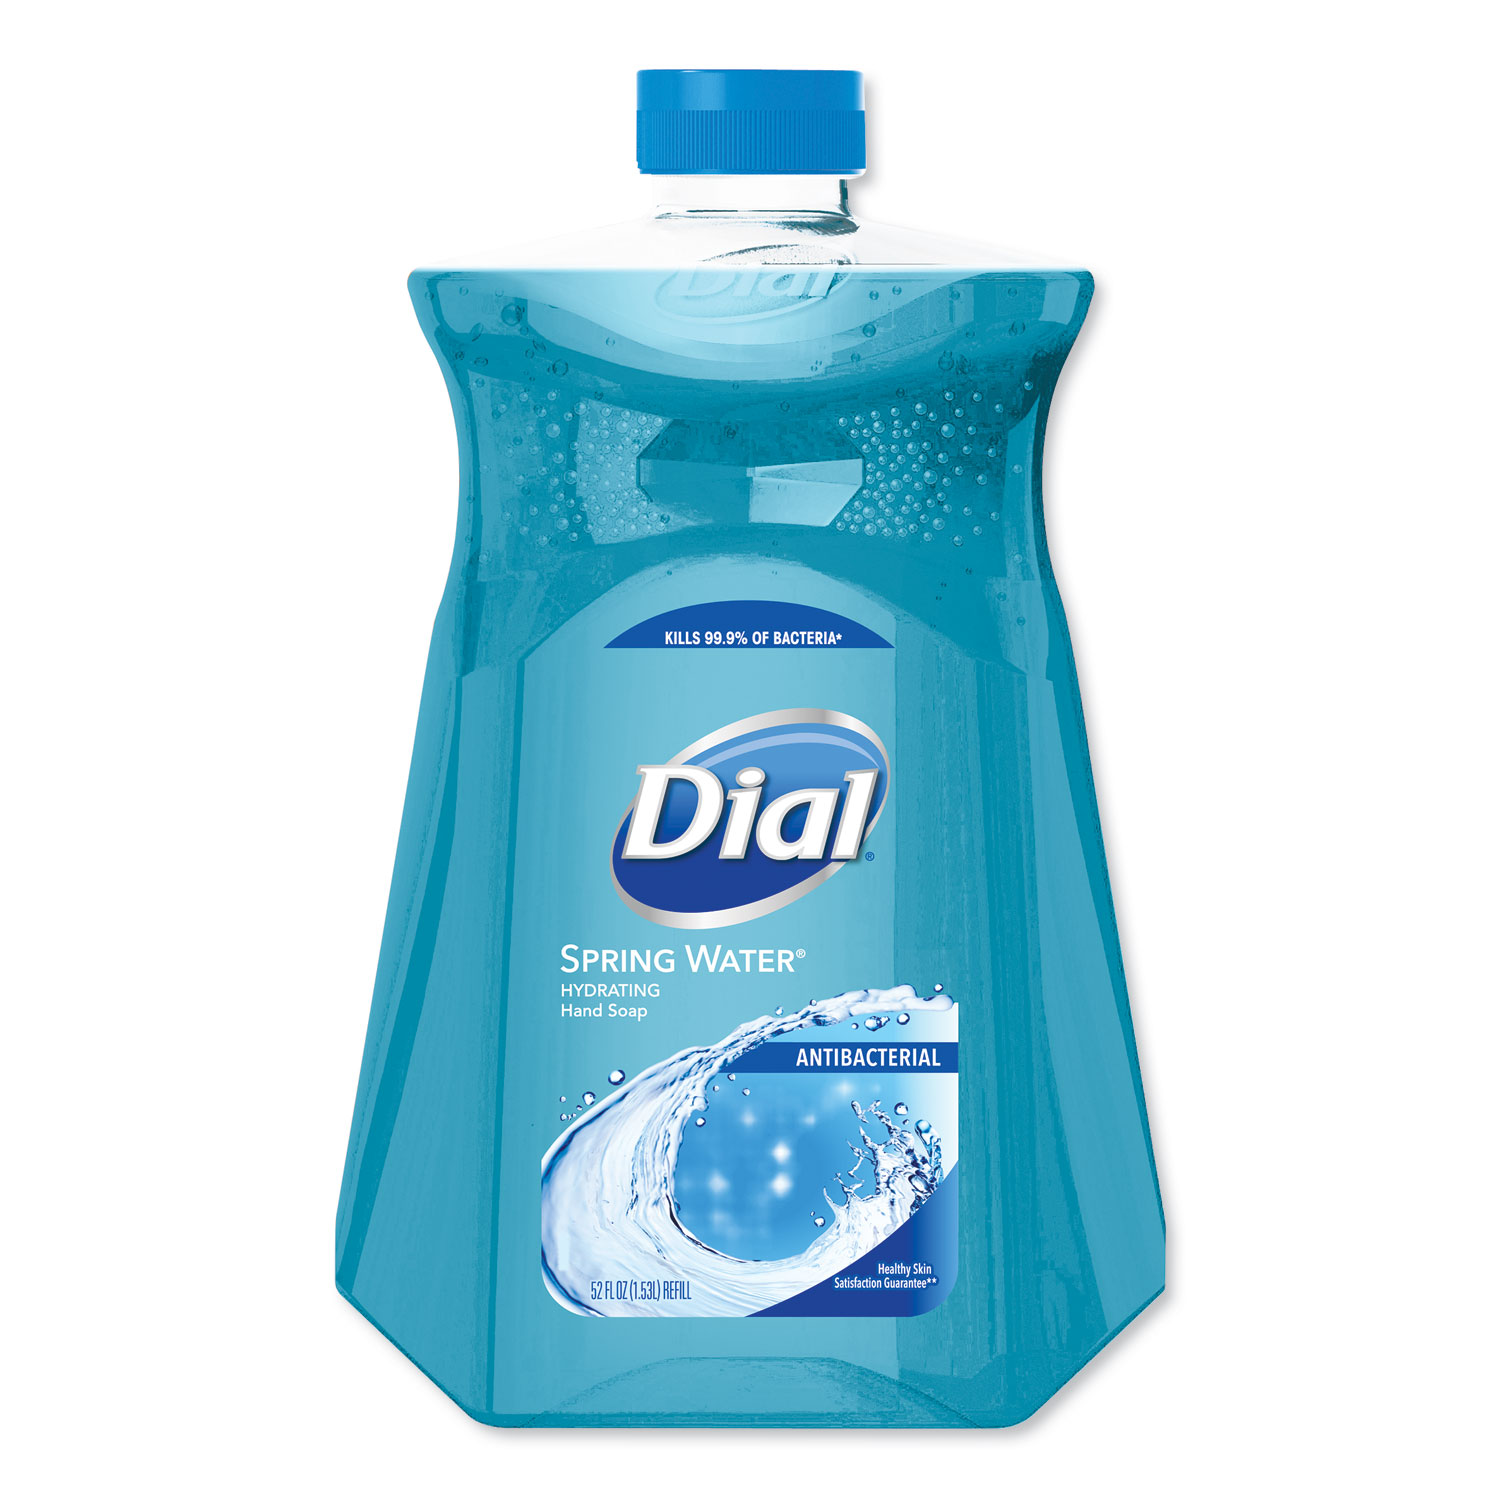  Dial DIA17010EA Antibacterial Liquid Hand Soap, Spring Water, 52 oz Bottle (DIA17010EA) 